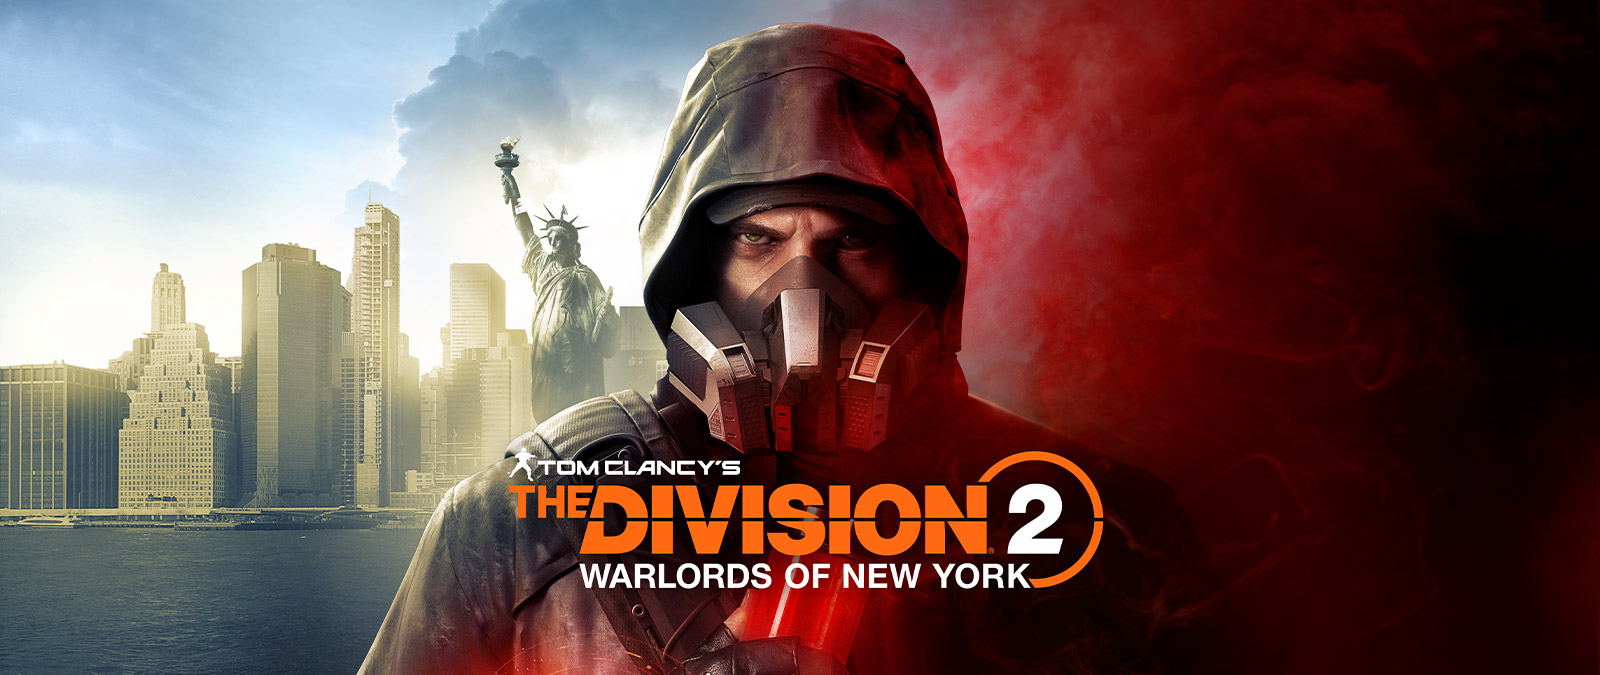 Tom Clancy's The Division 2 Warlords of New York - Aaron Keener portant un masque à gaz se tient devant la Statue de la Liberté